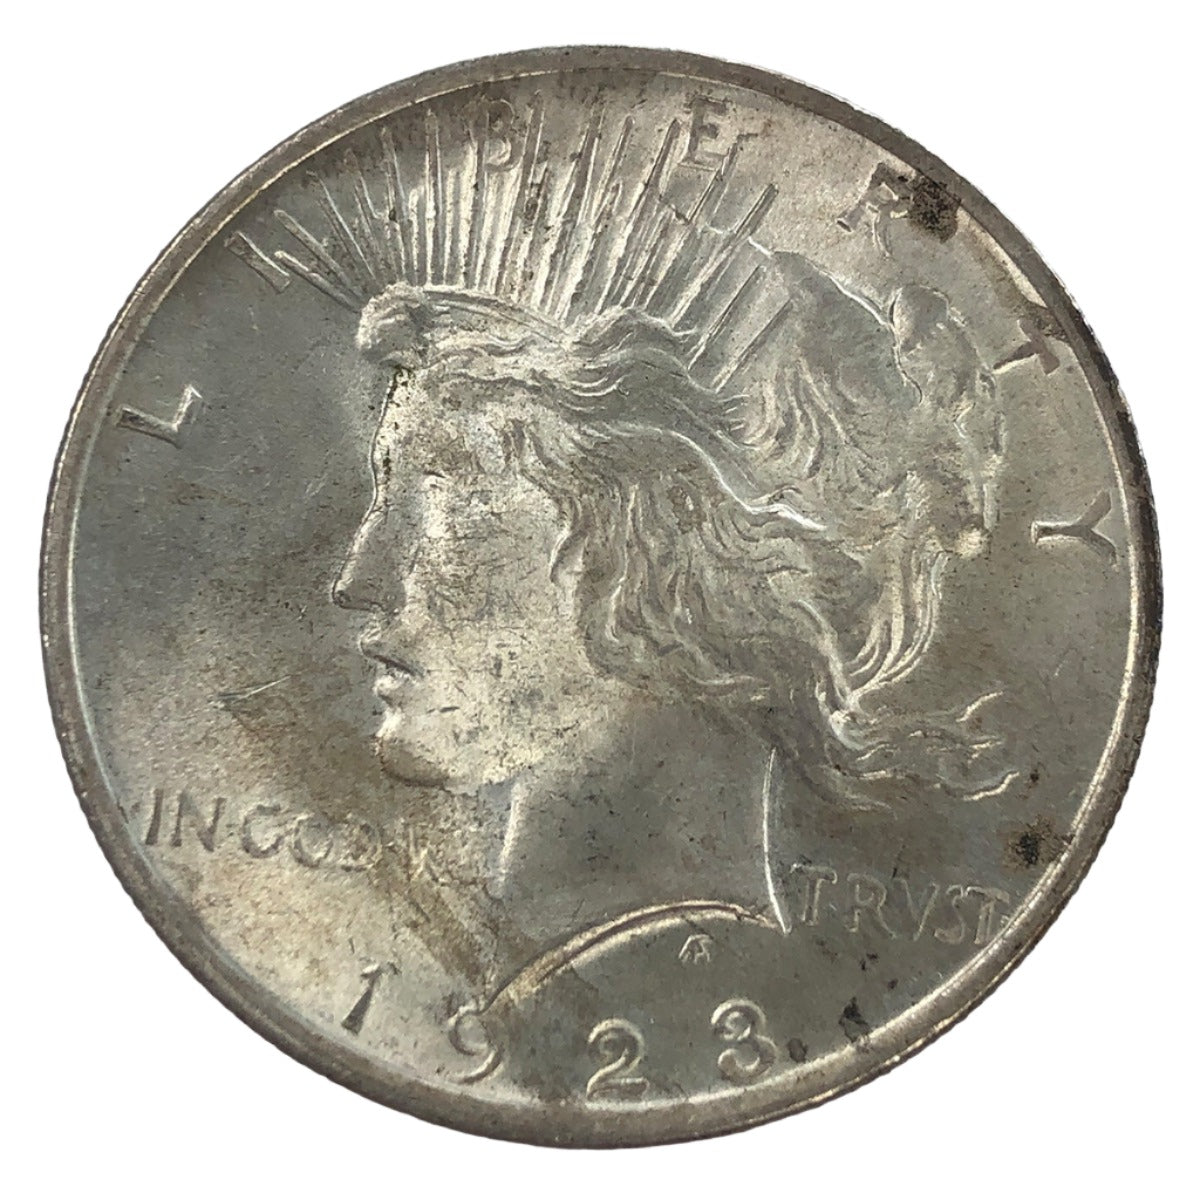 1923 Peace Silver Dollar (BU)